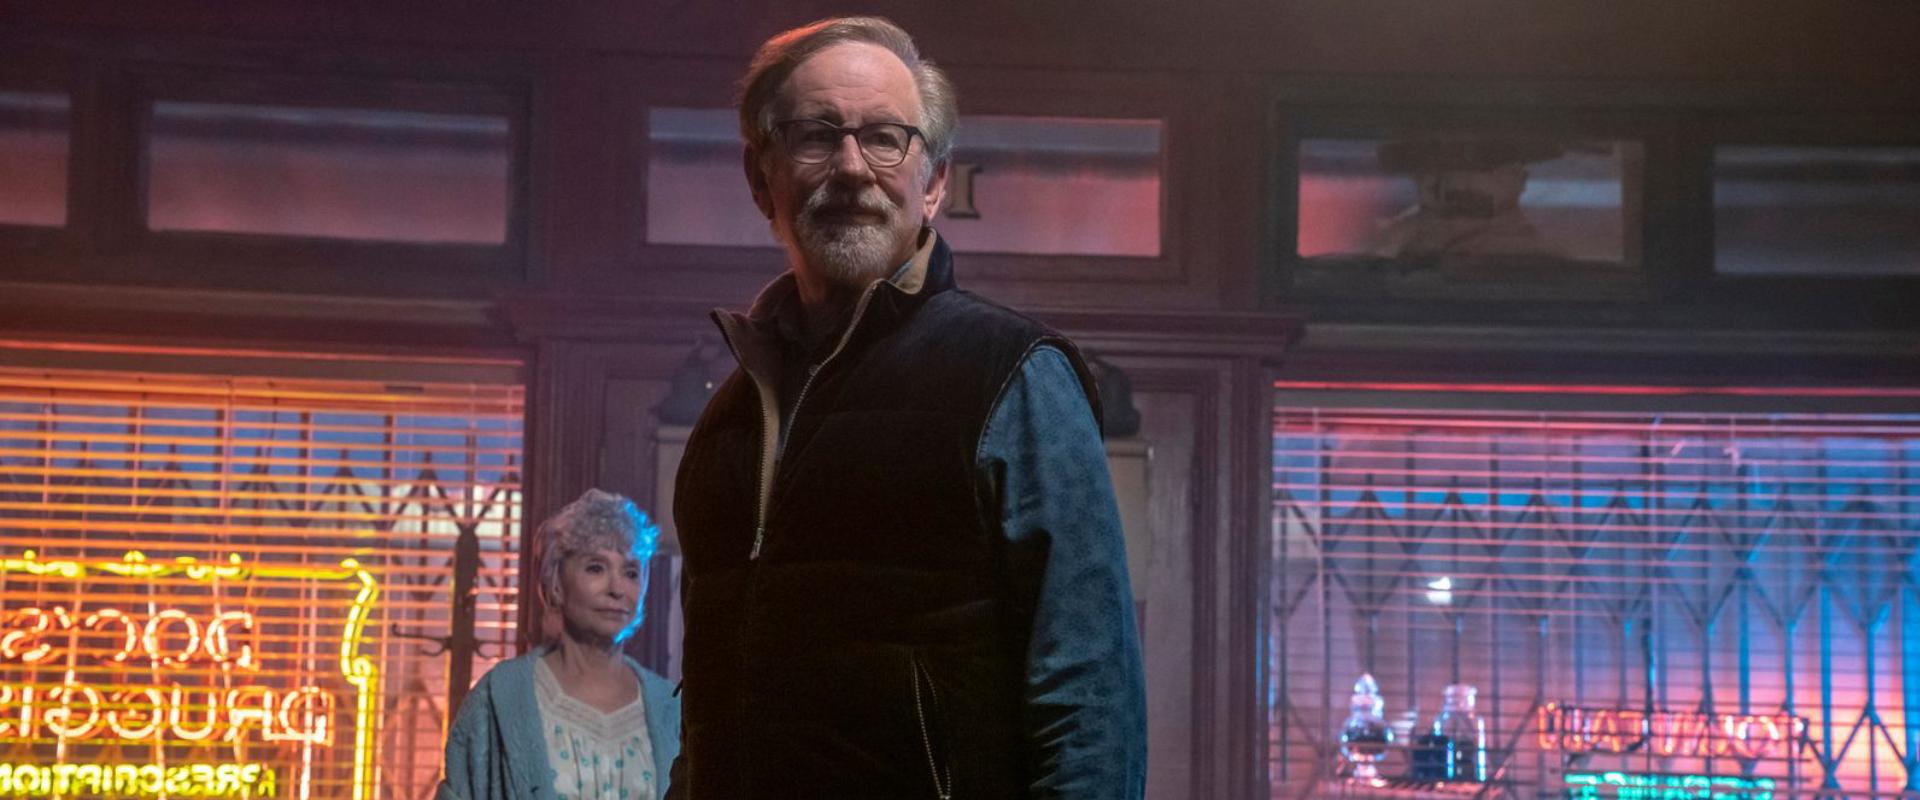 Premierdátumot kapott Steven Spielberg új filmje